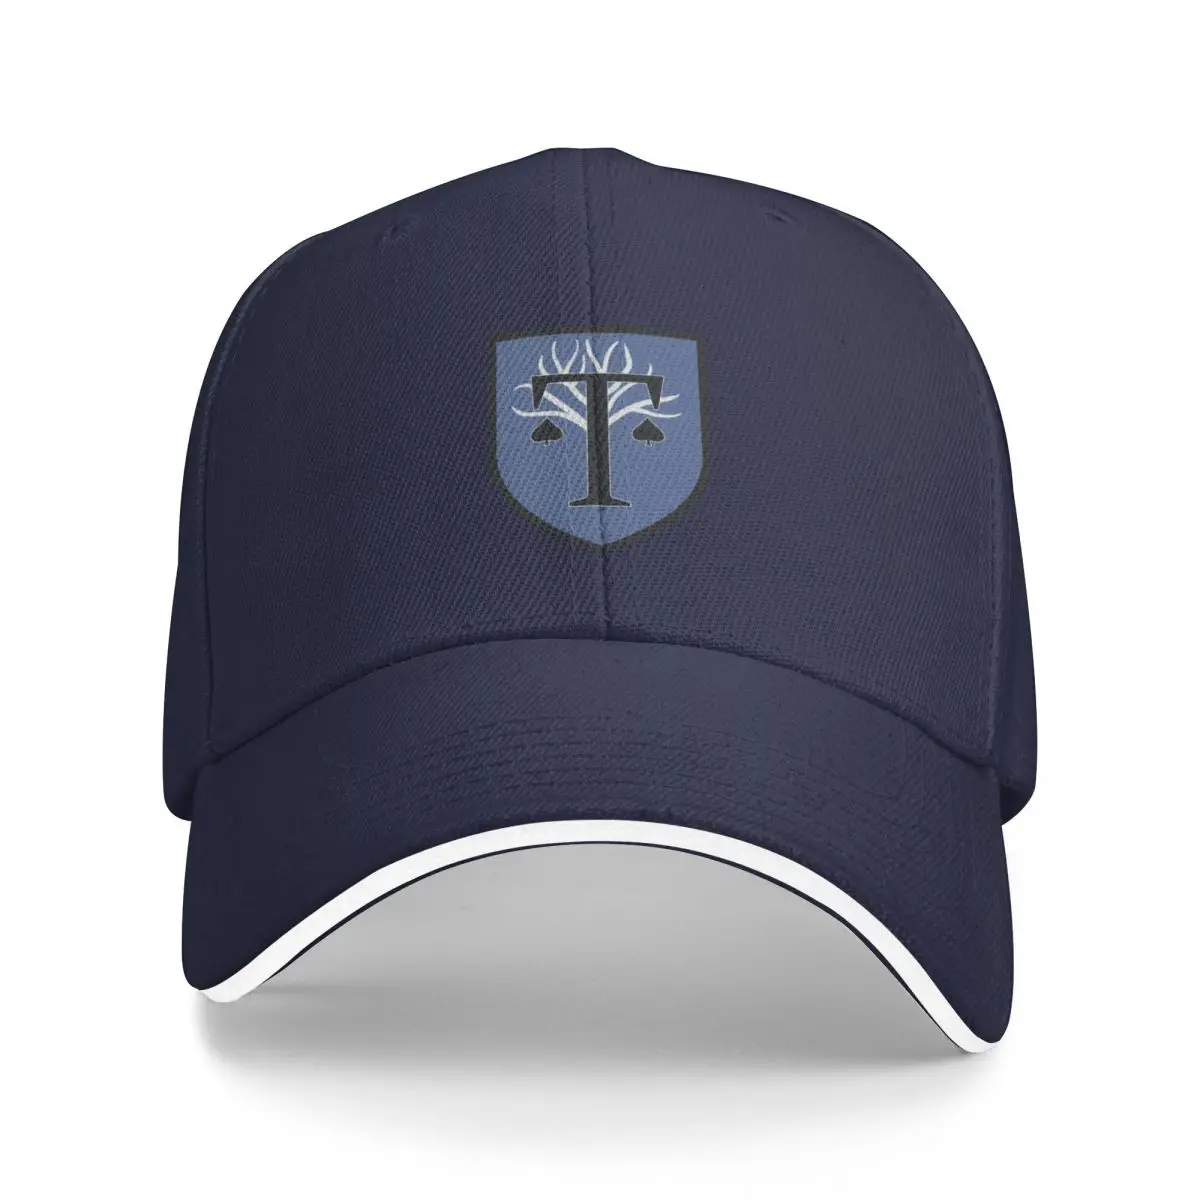 

truham grammar school Baseball Cap Custom Cap Bobble Hat New In The Hat Boy Cap Women'S